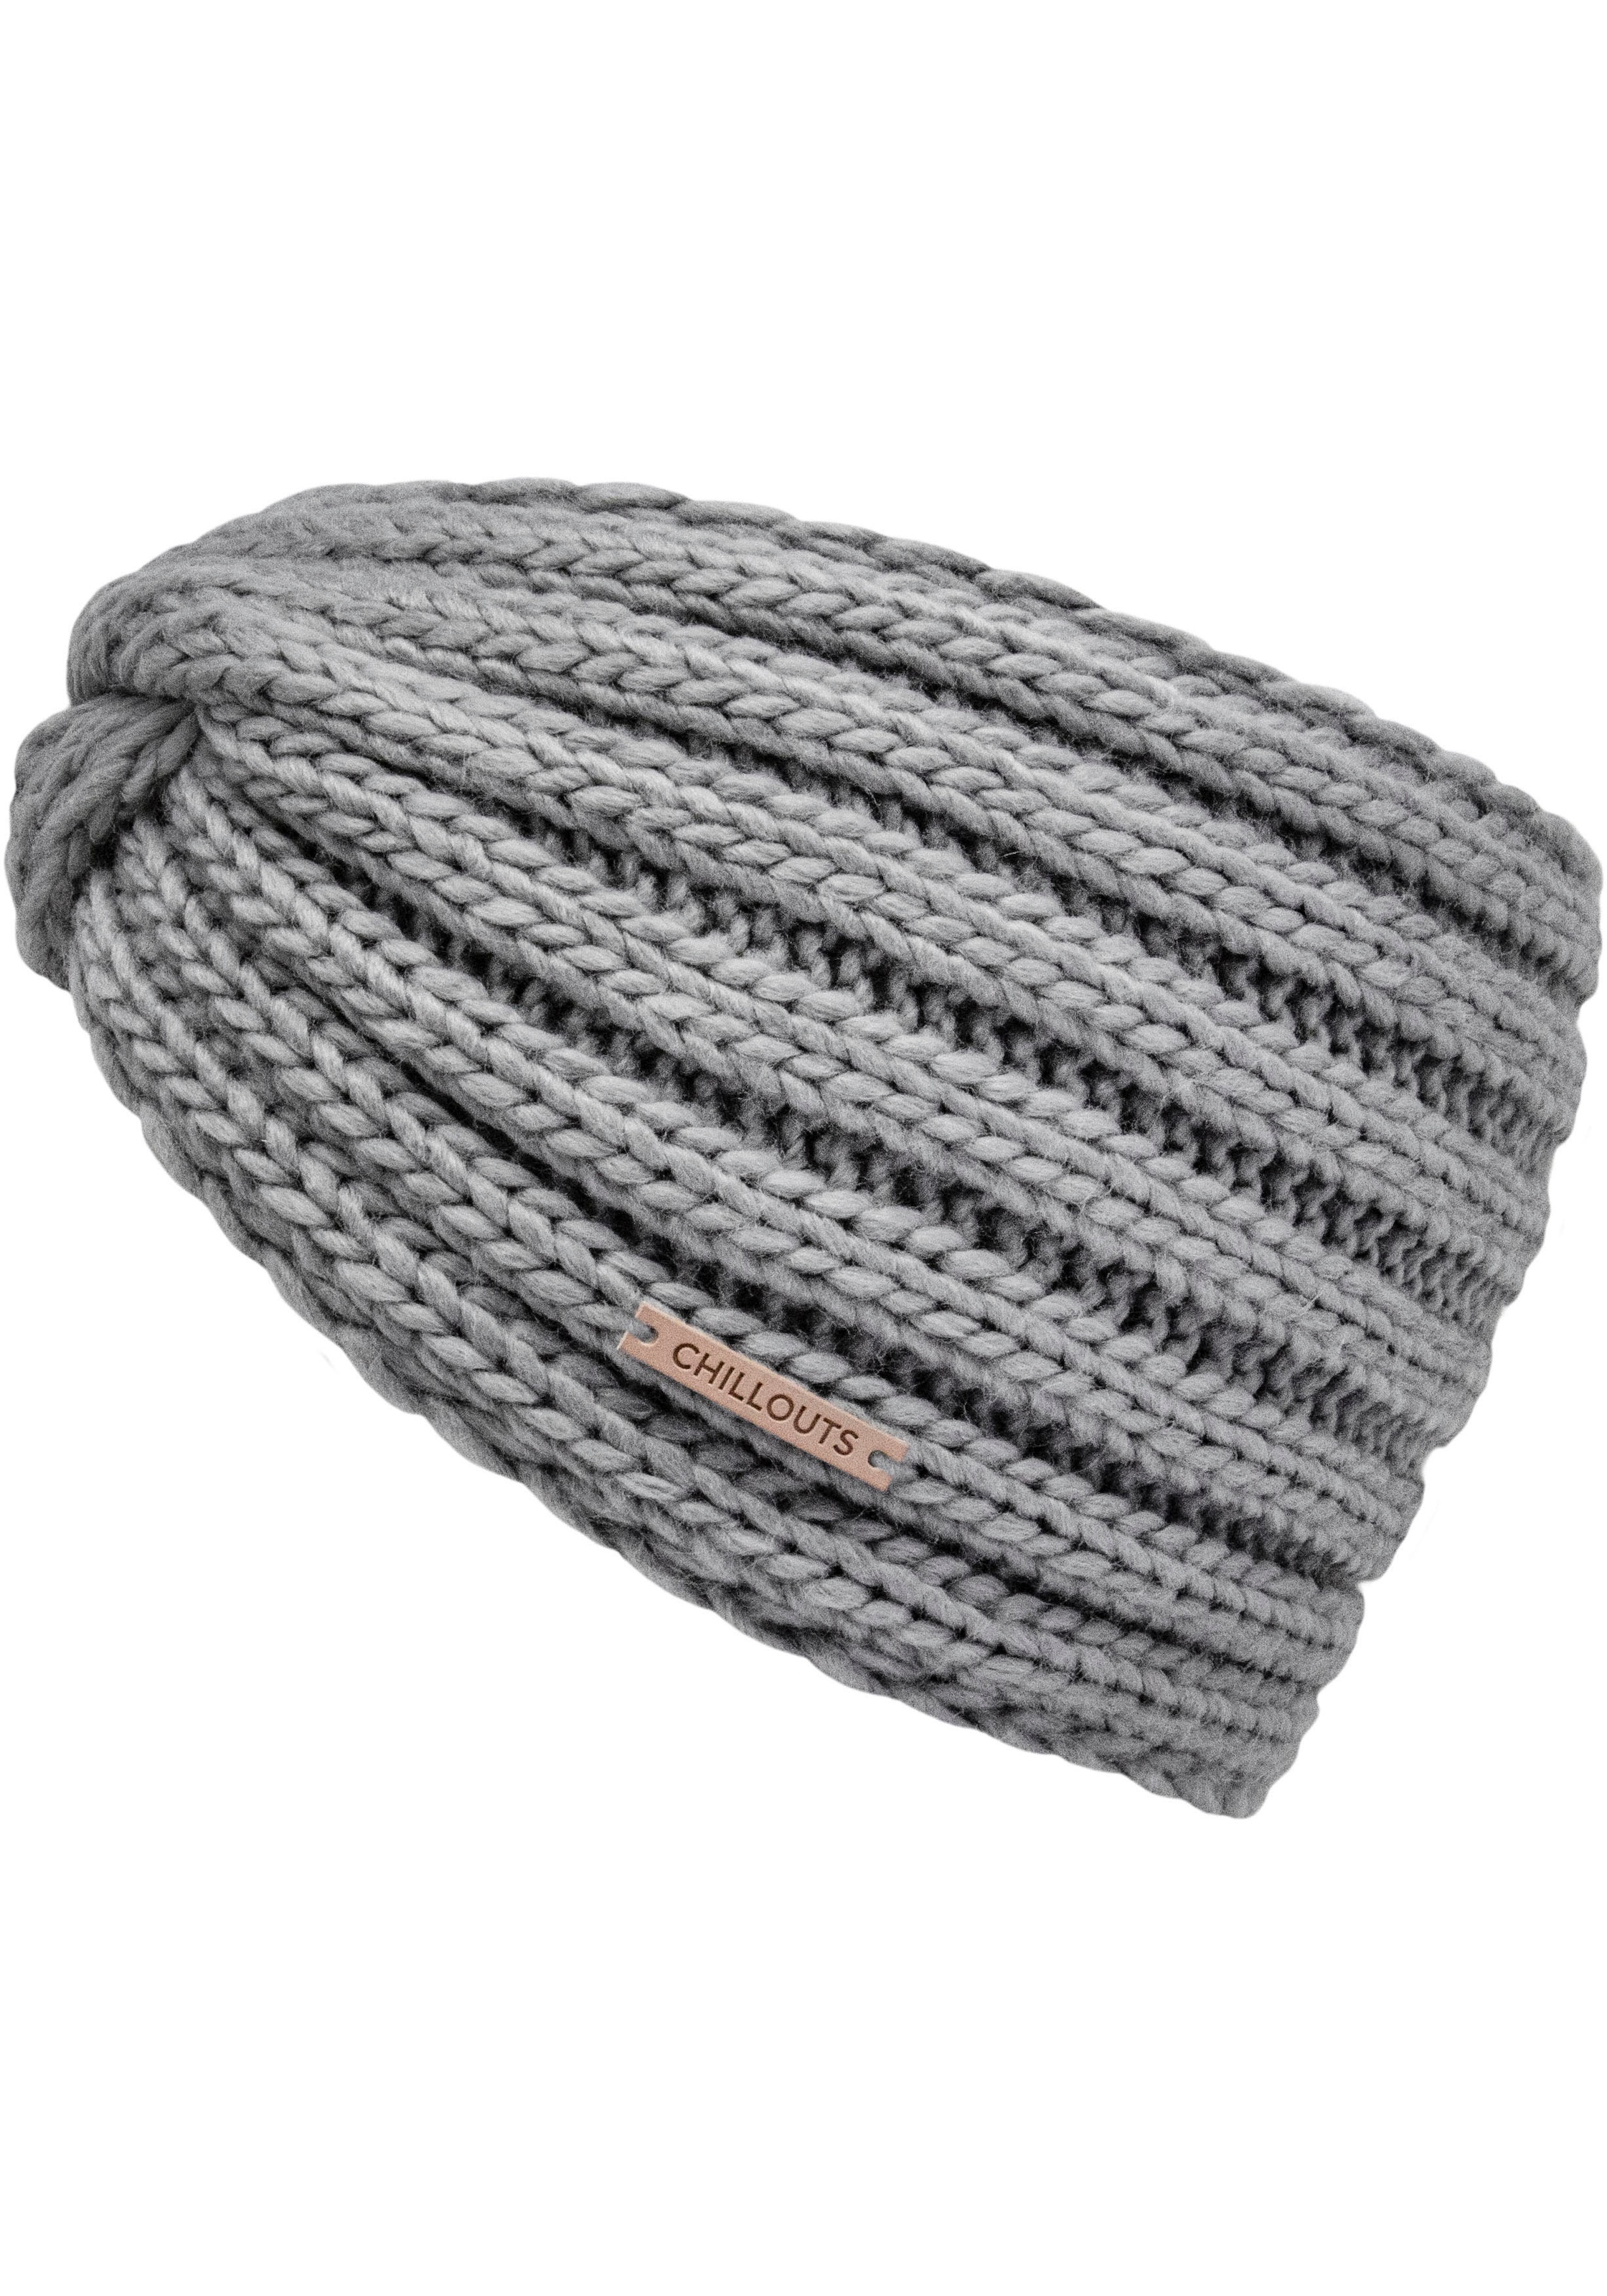 chillouts Stirnband »Tina Headband«, Vorn mit Knoten